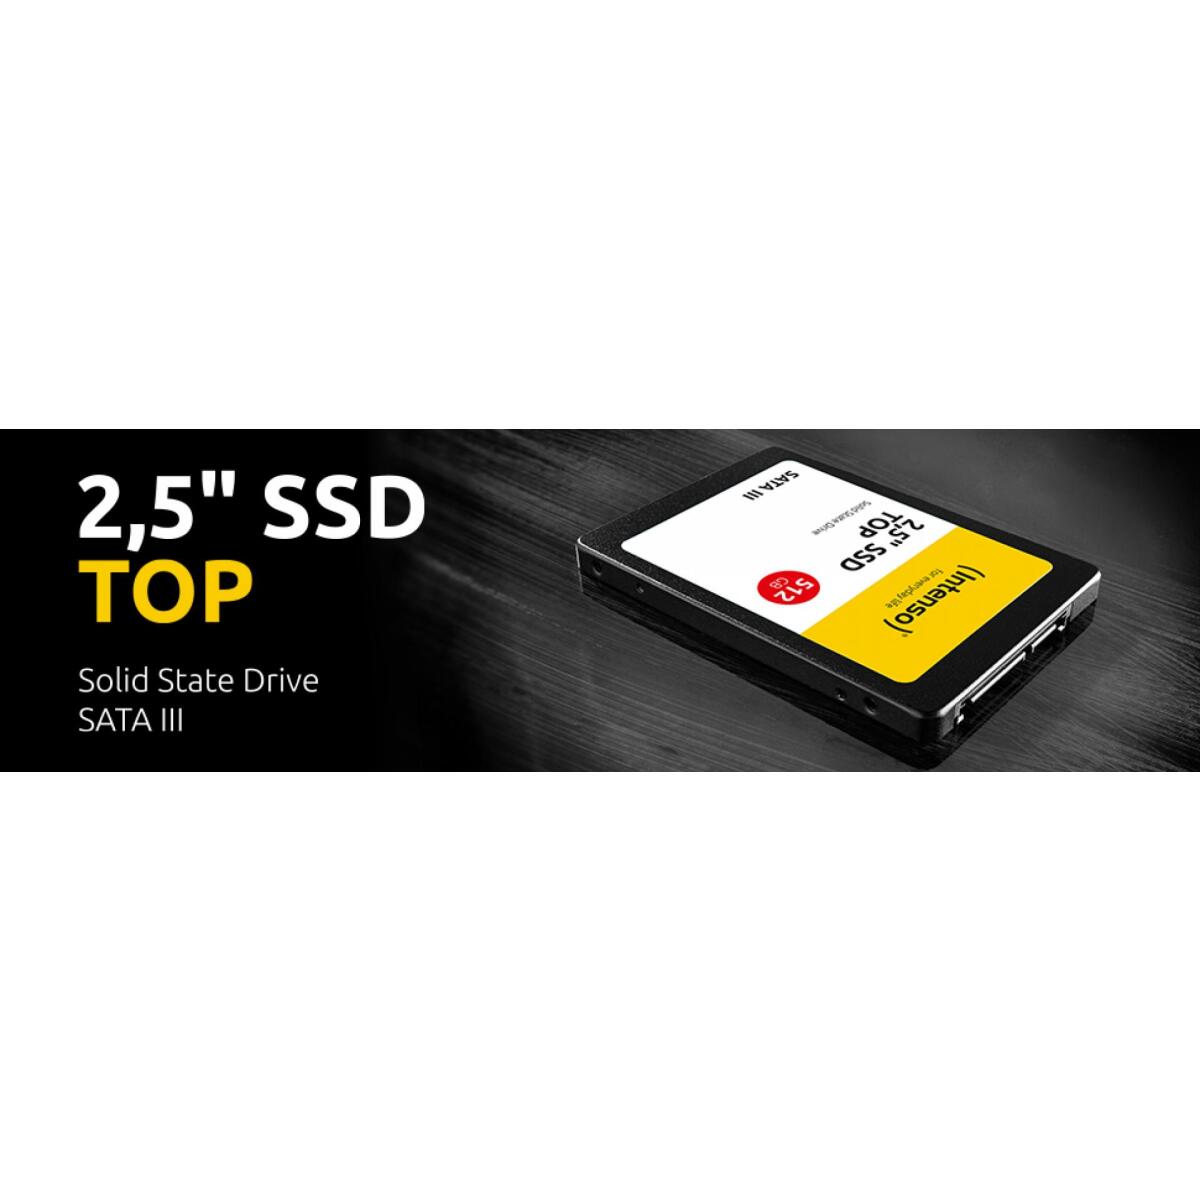 SSD Intenso 512GB TOP SATA3 2,5\'\' intern - Computerhilfe OWL Onlinesh,  40,16 €